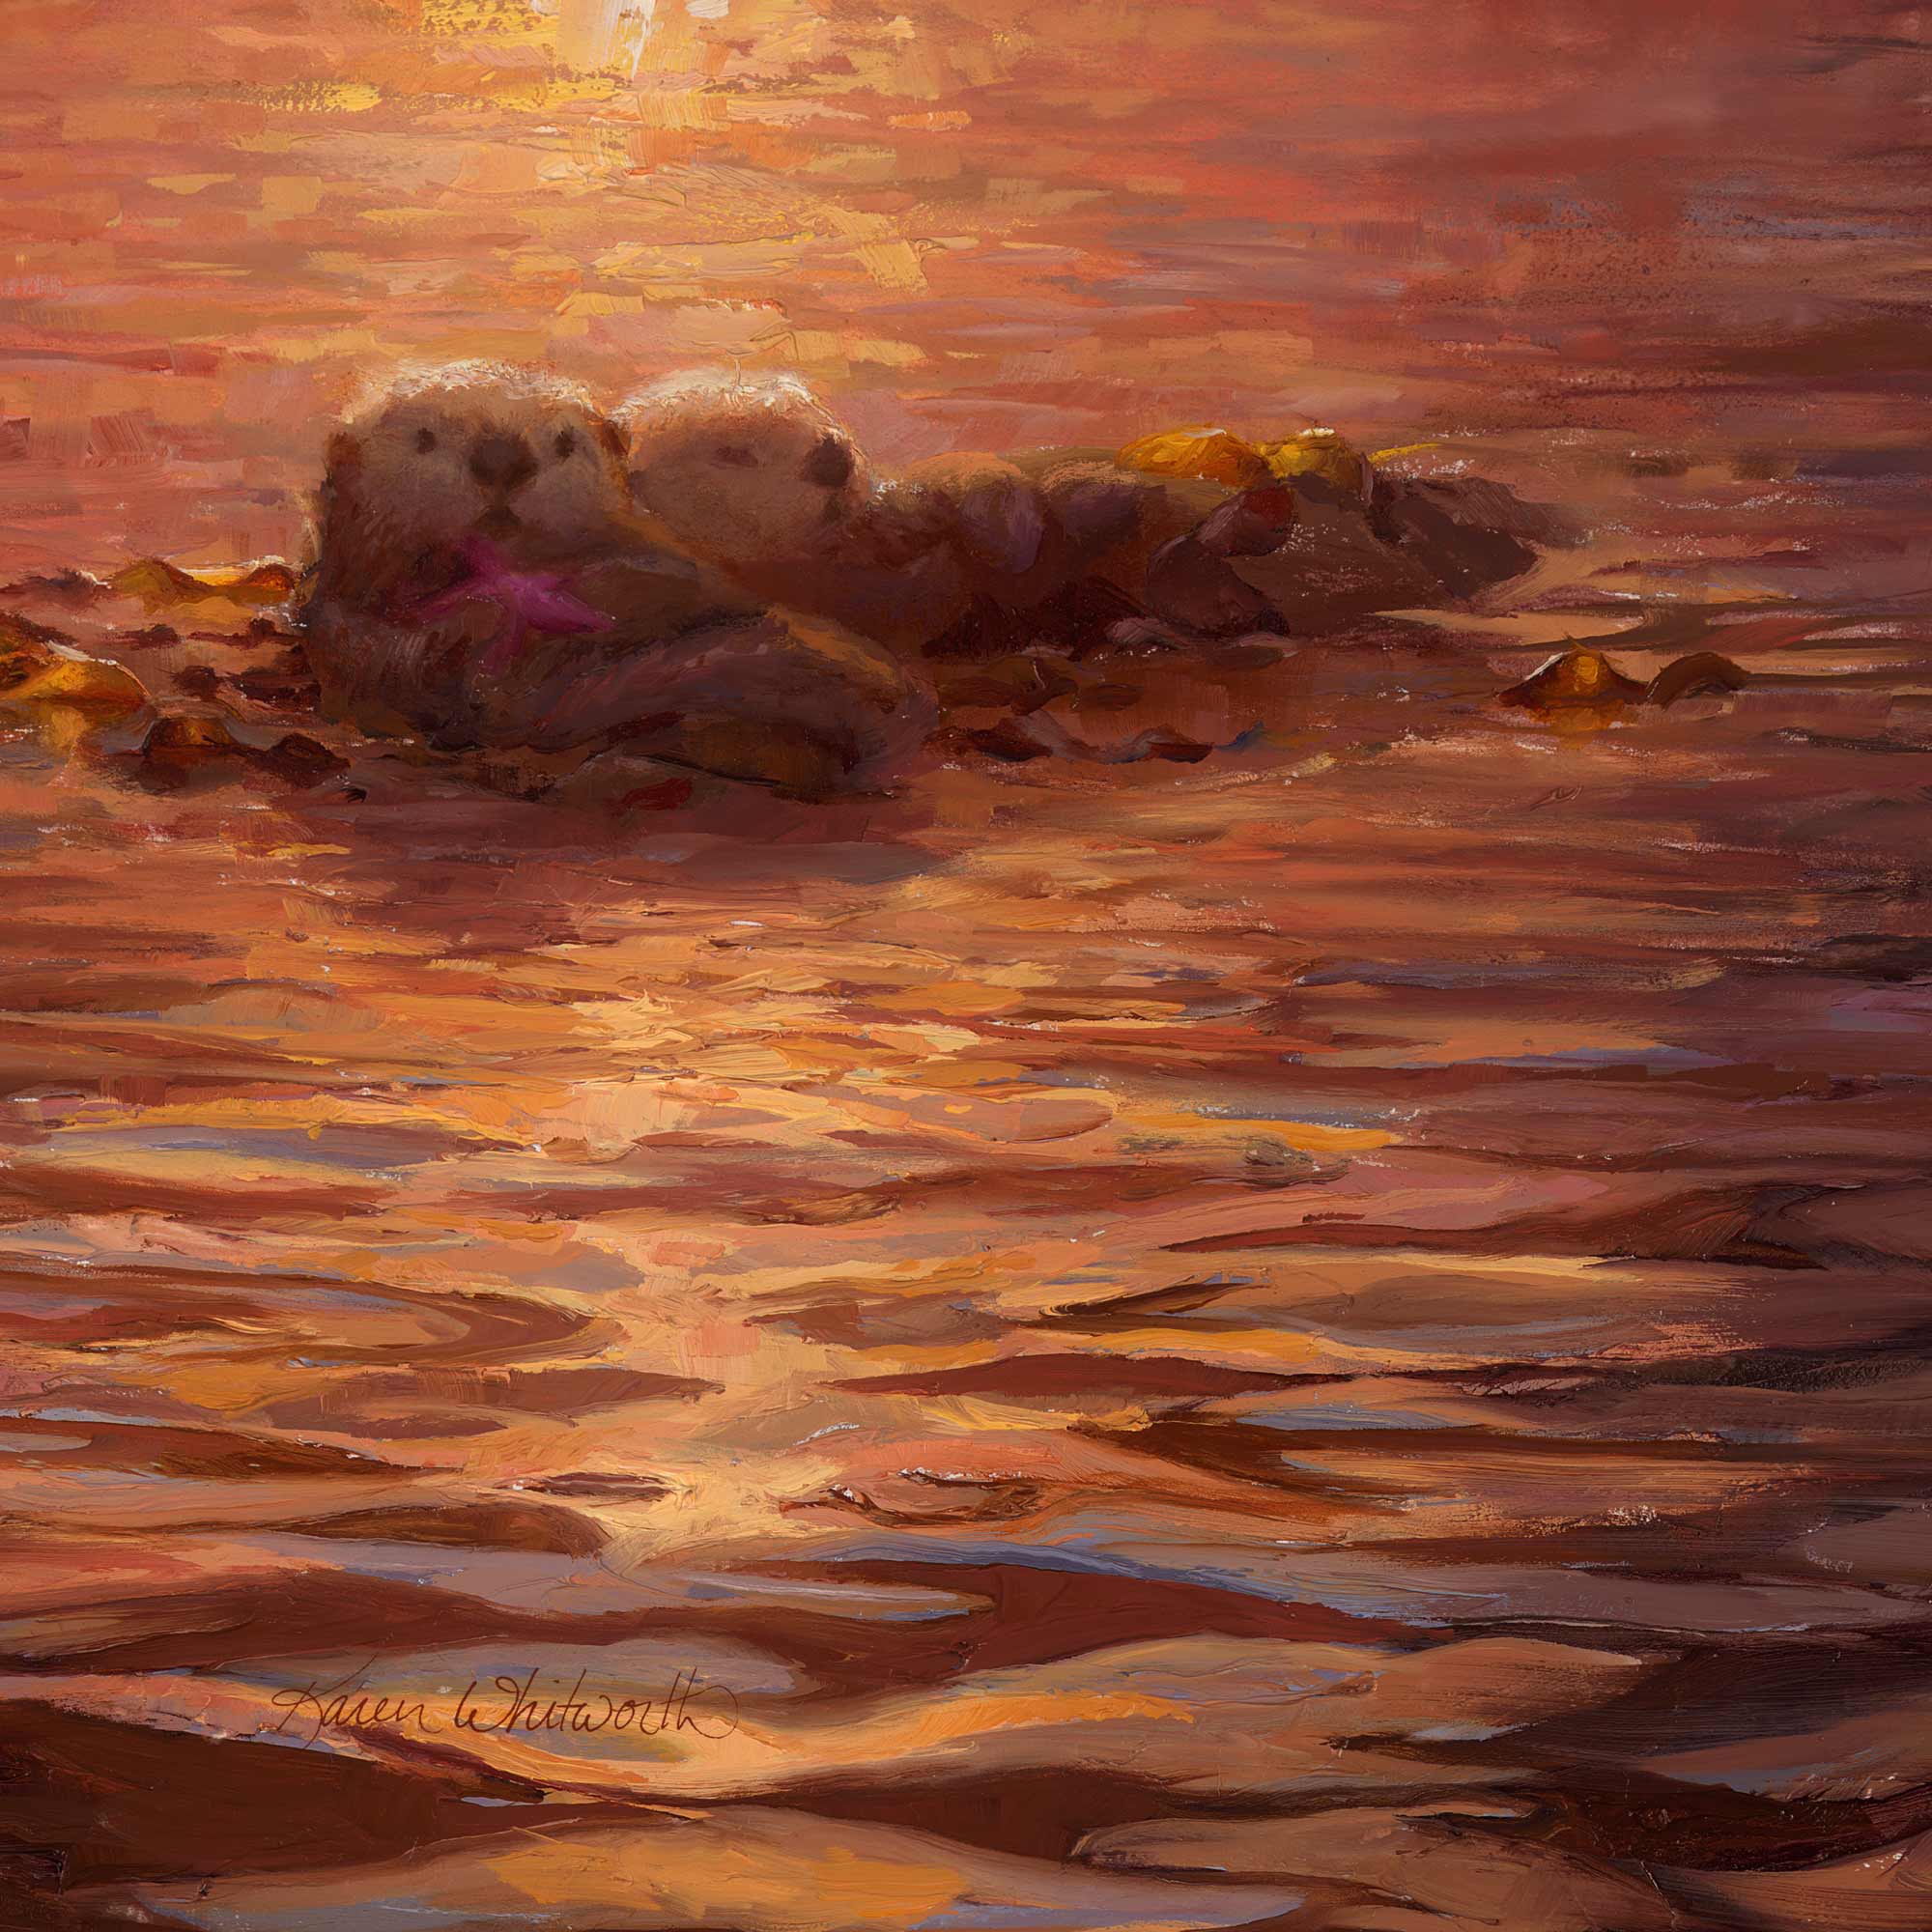 Otter painting of sea otter wall art print by wildlife artist Karen Whitworth